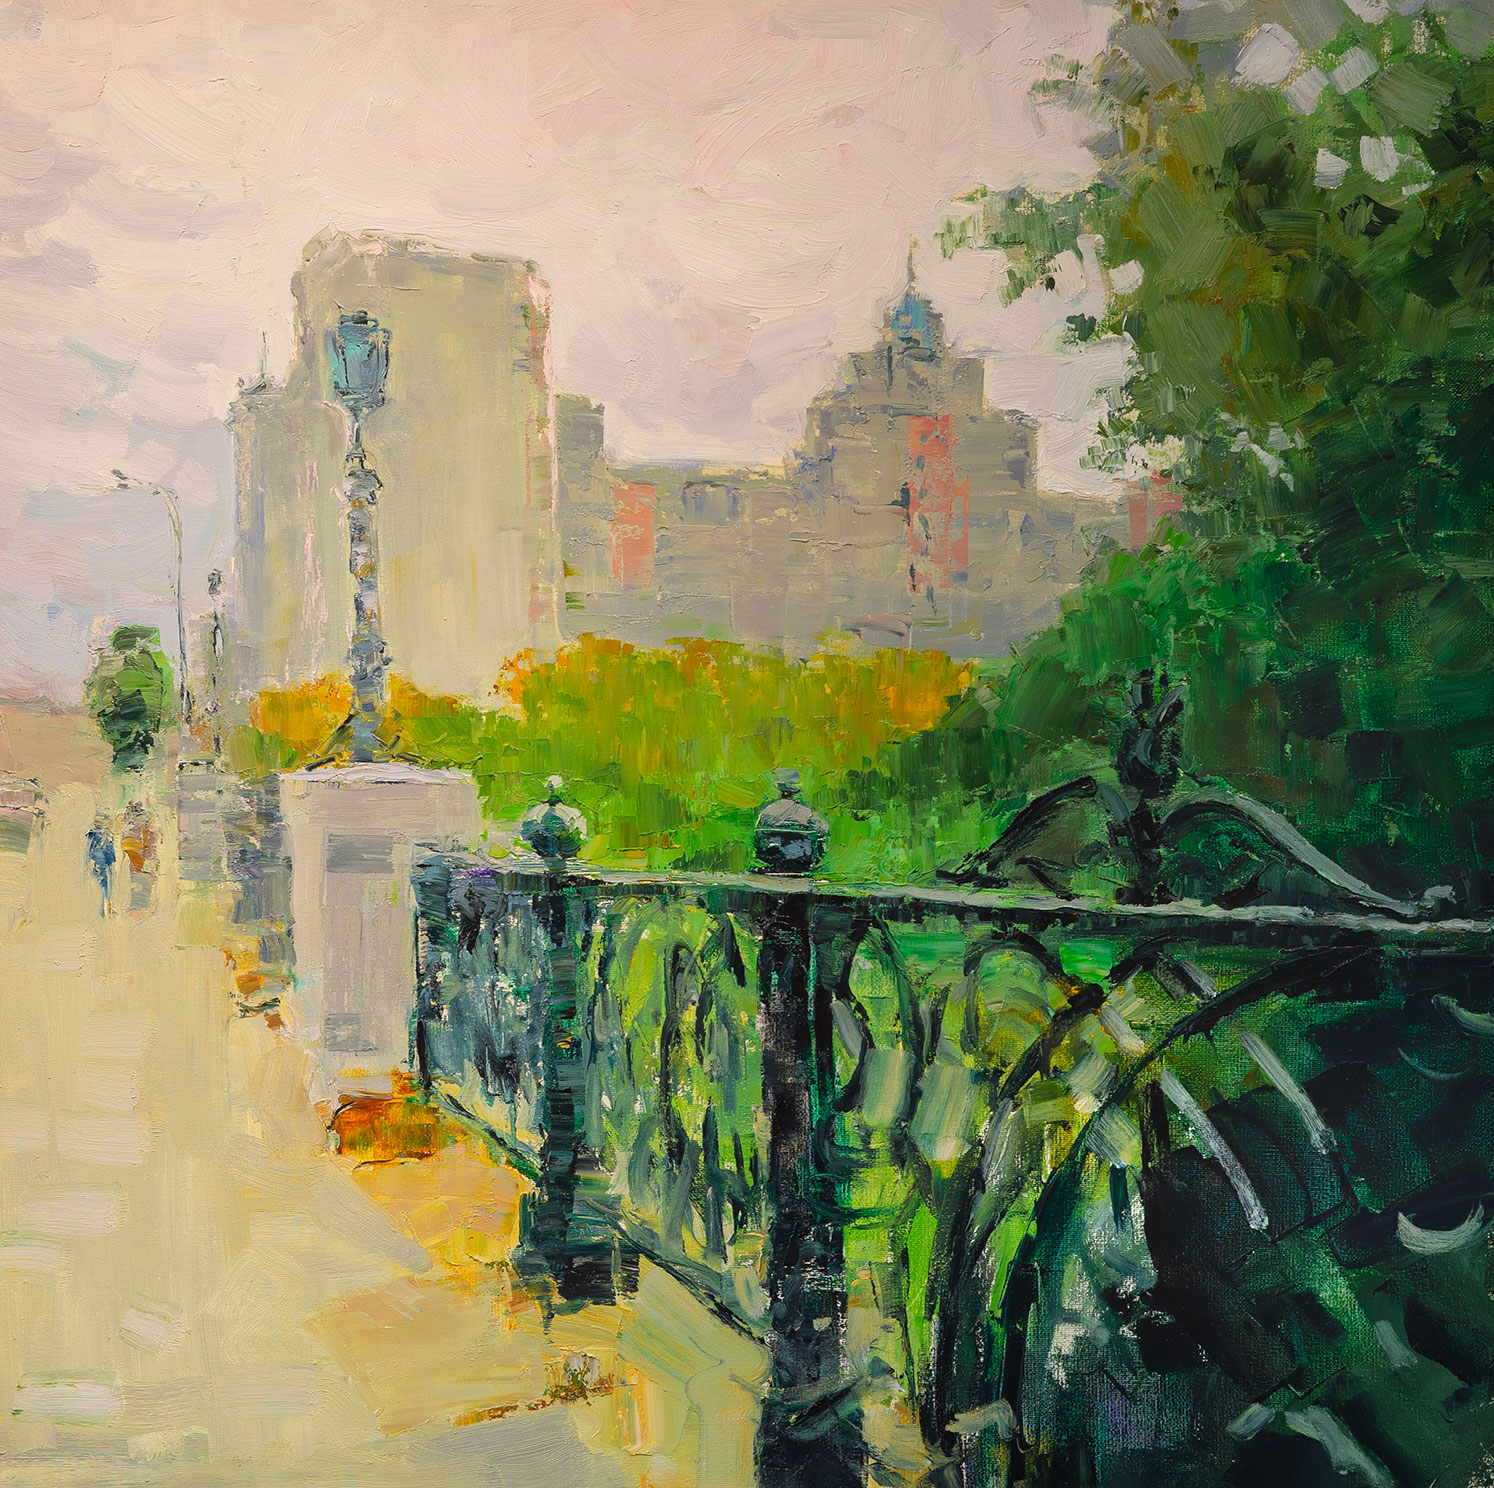 Ekaterinburg. On the royal bridge - 1, Sergei Prokhorov, Buy the painting Oil